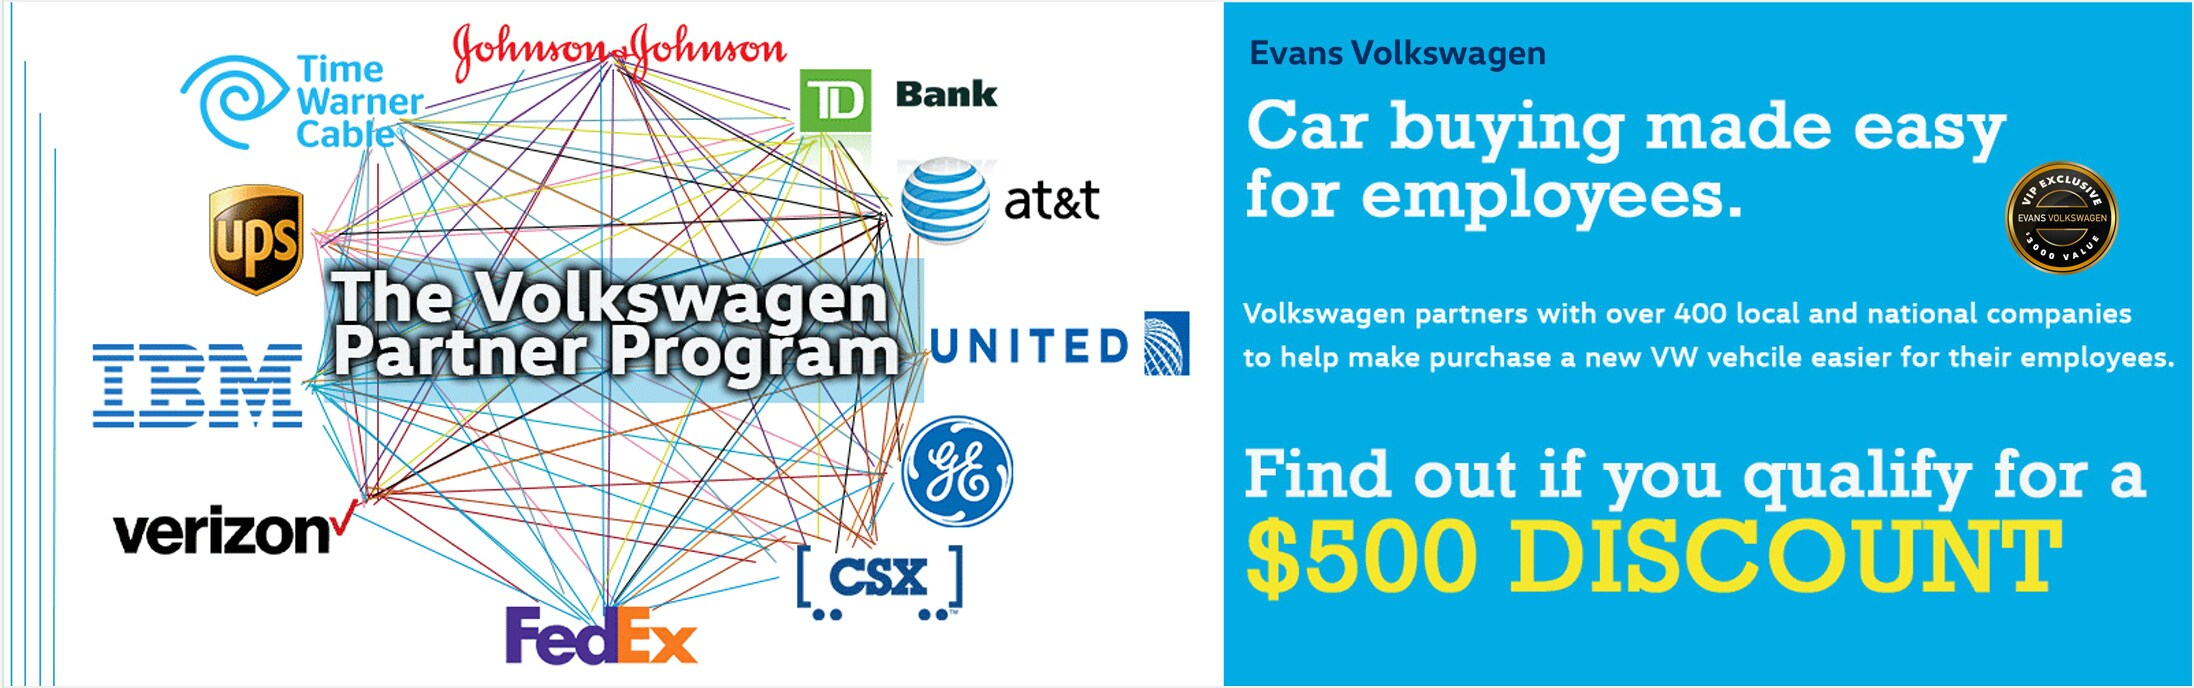 Evans Volkswagen Partner Purchase Program